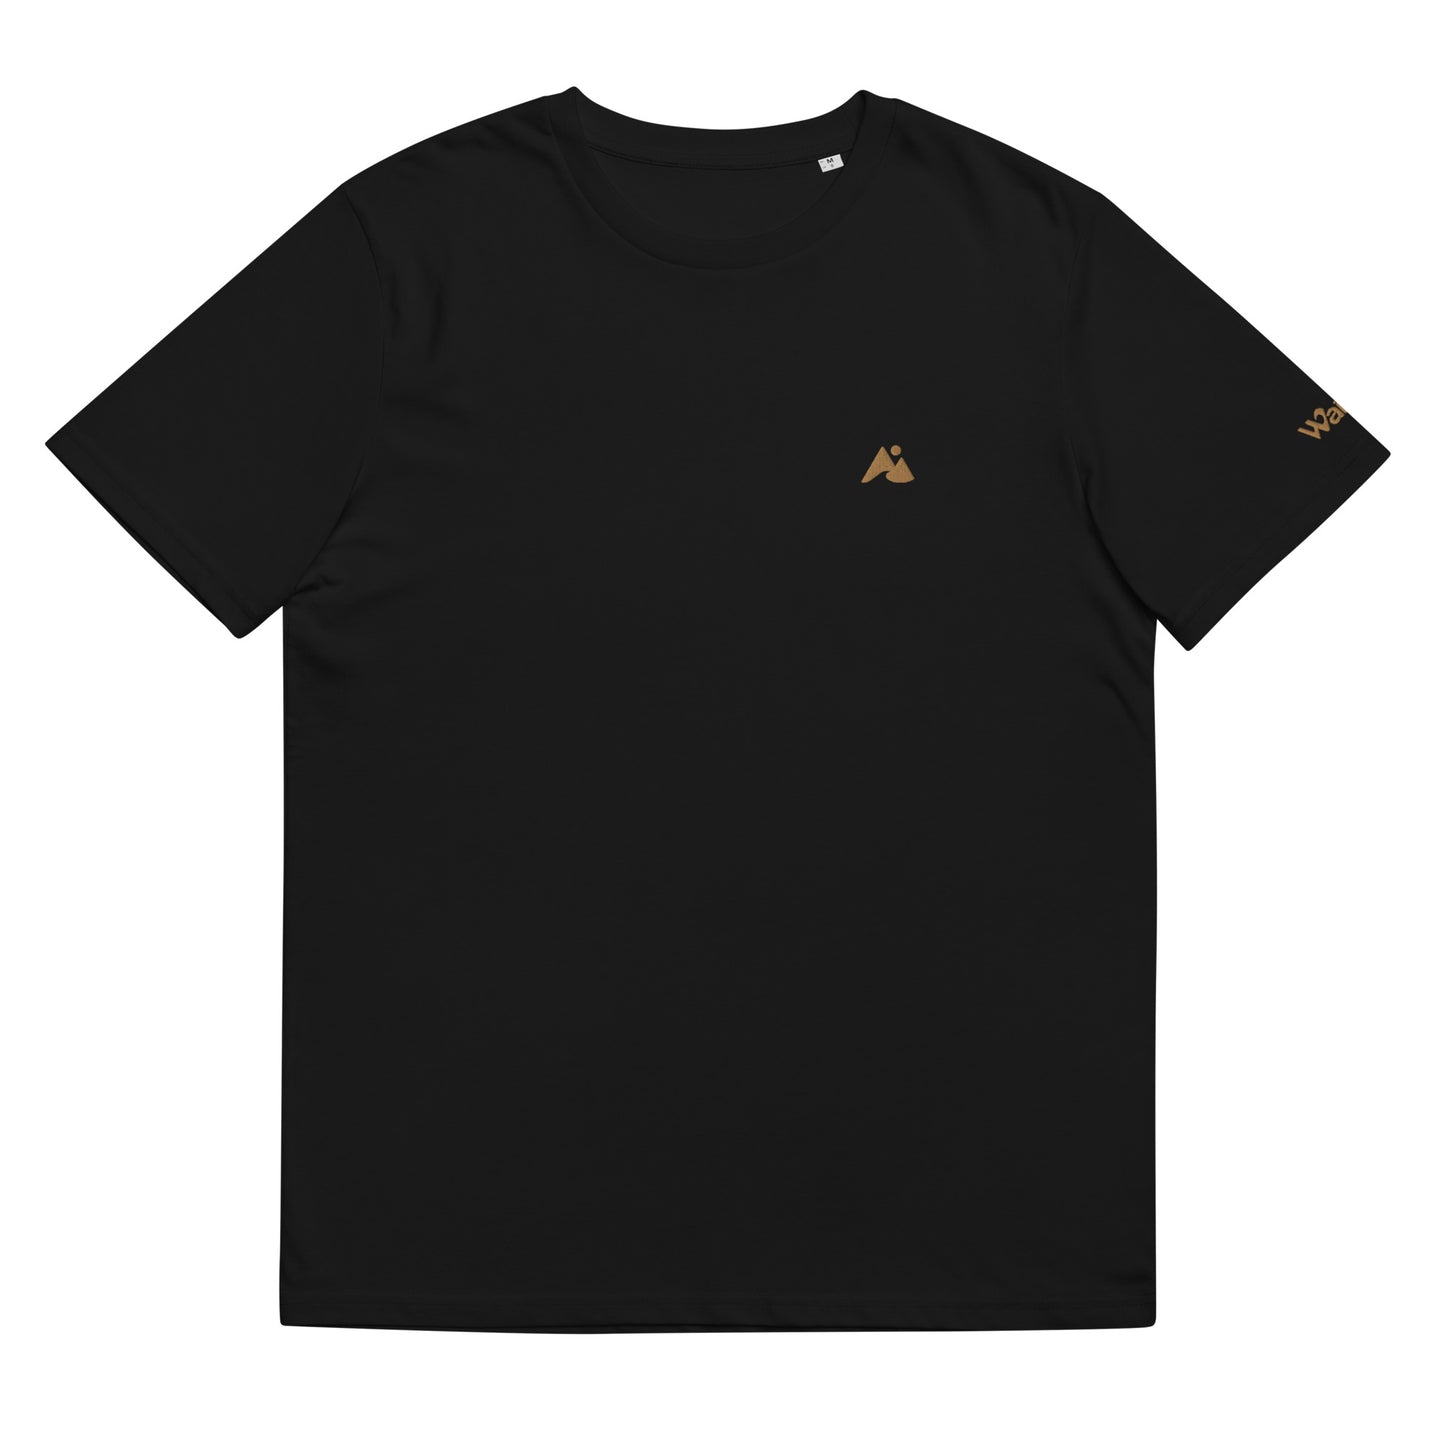 T-shirt unisex coton bio logo Waïloa doré brodé